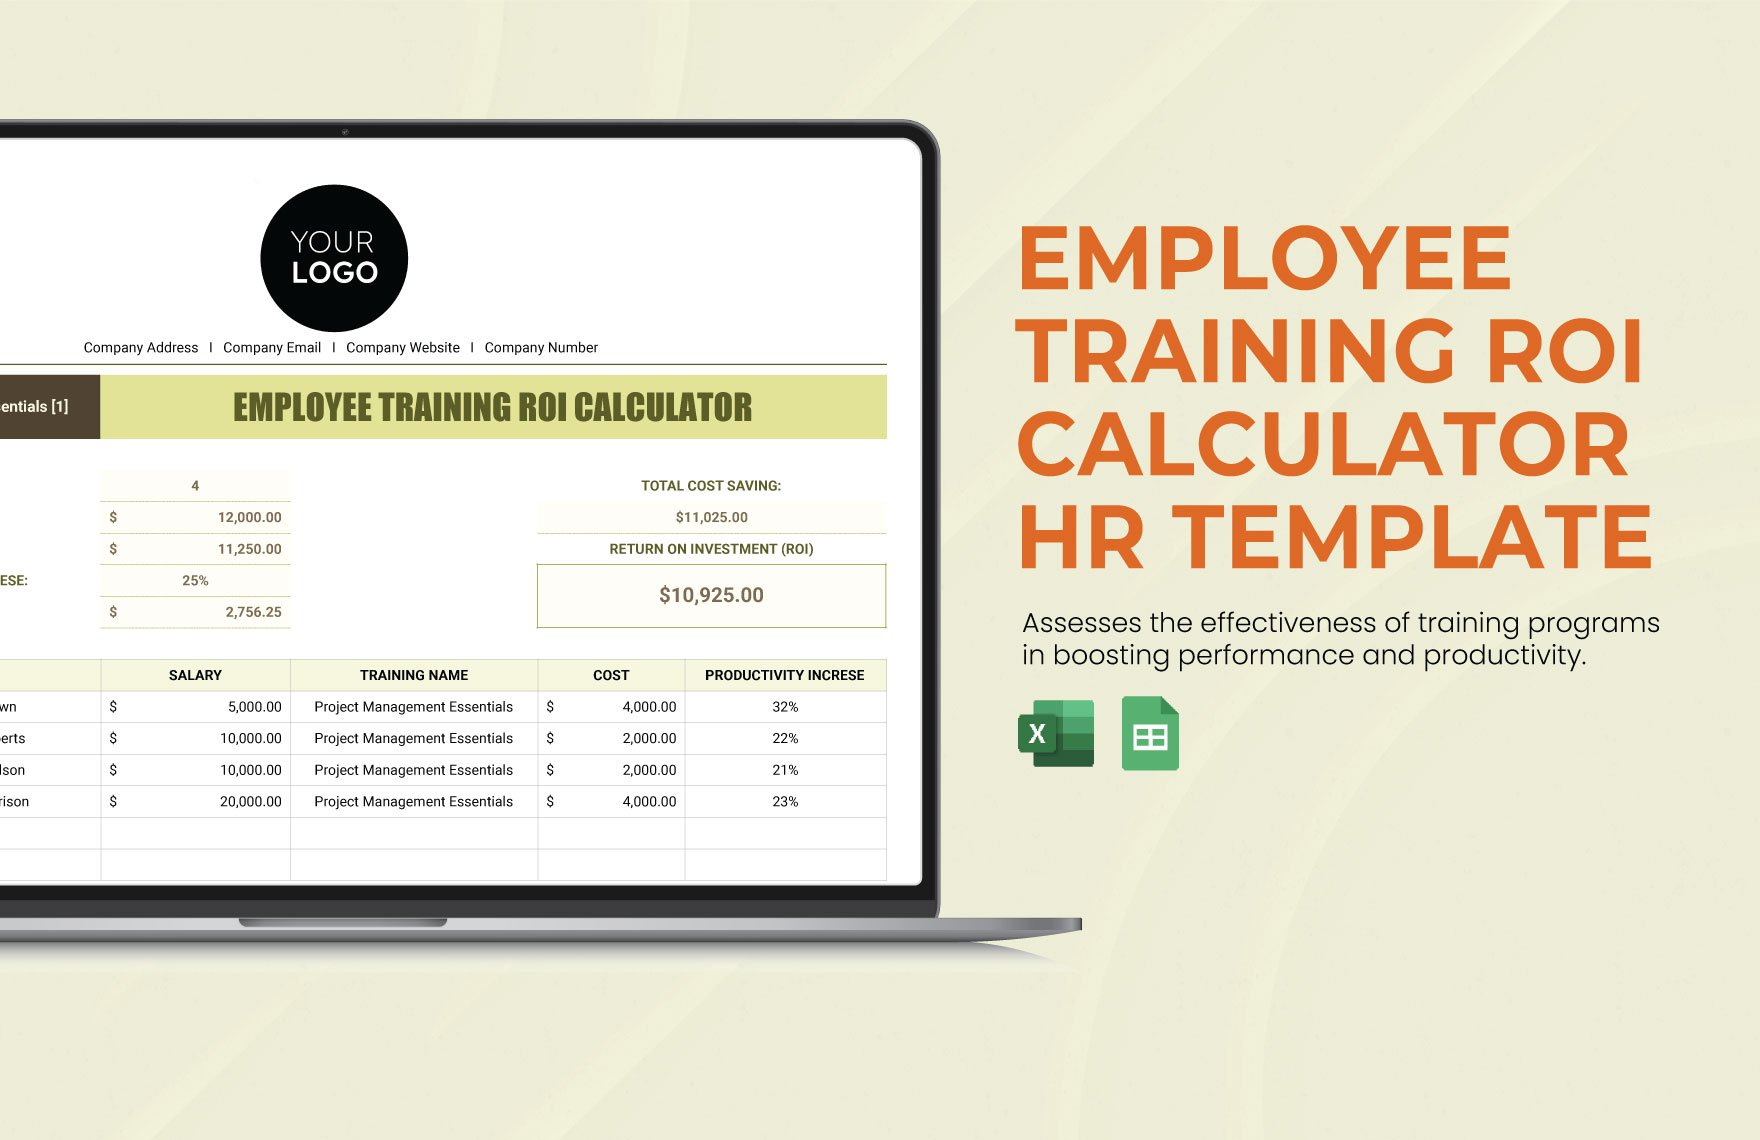 Employee Training ROI Calculator HR Template